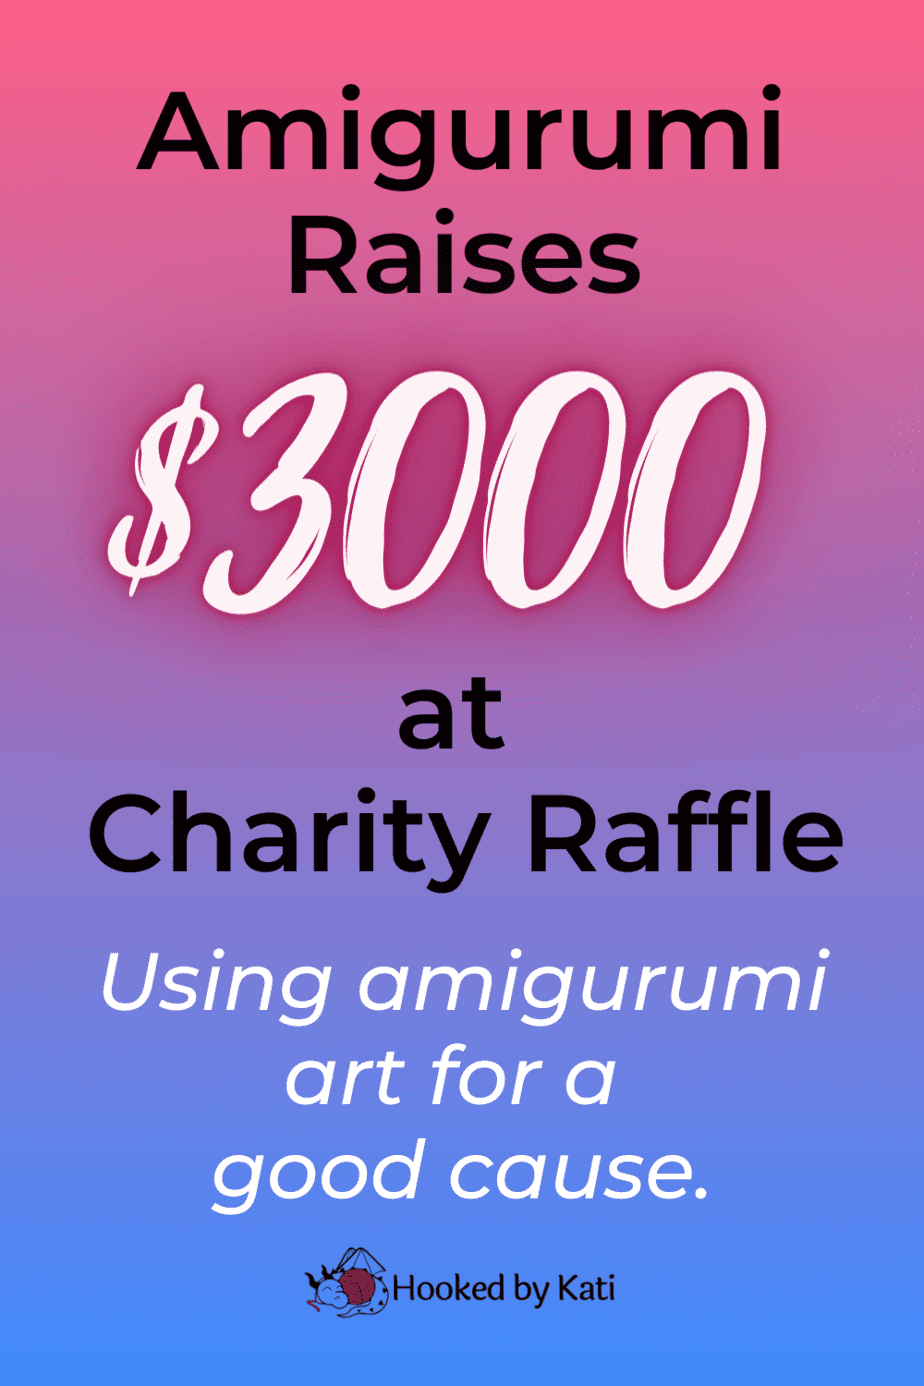 amigurumi raises $3000 at charity raffle